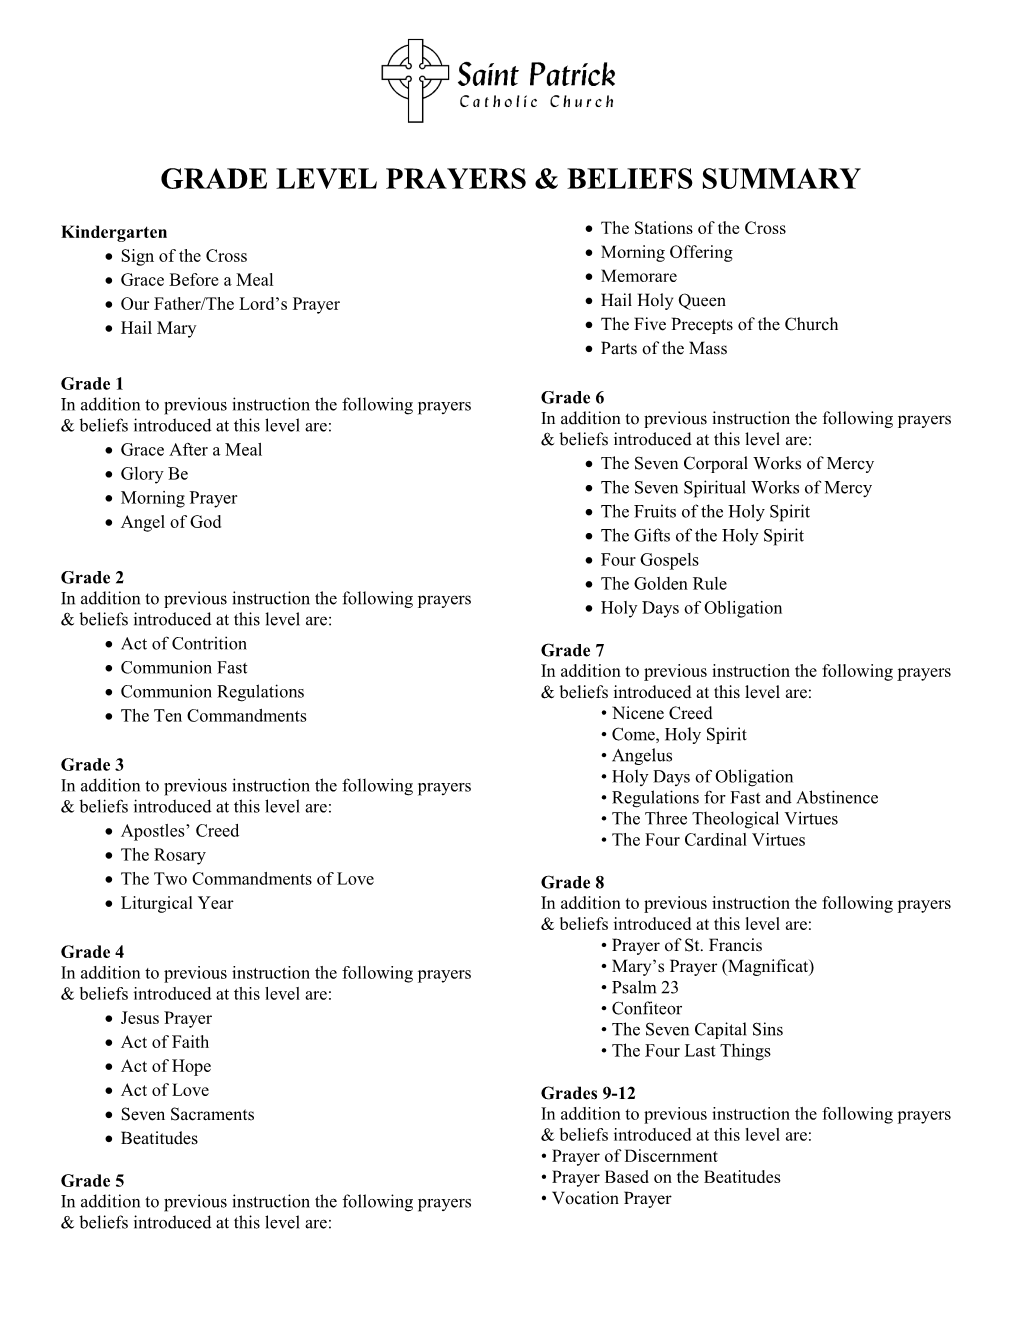 Grade Level Prayers & Beliefs Summary